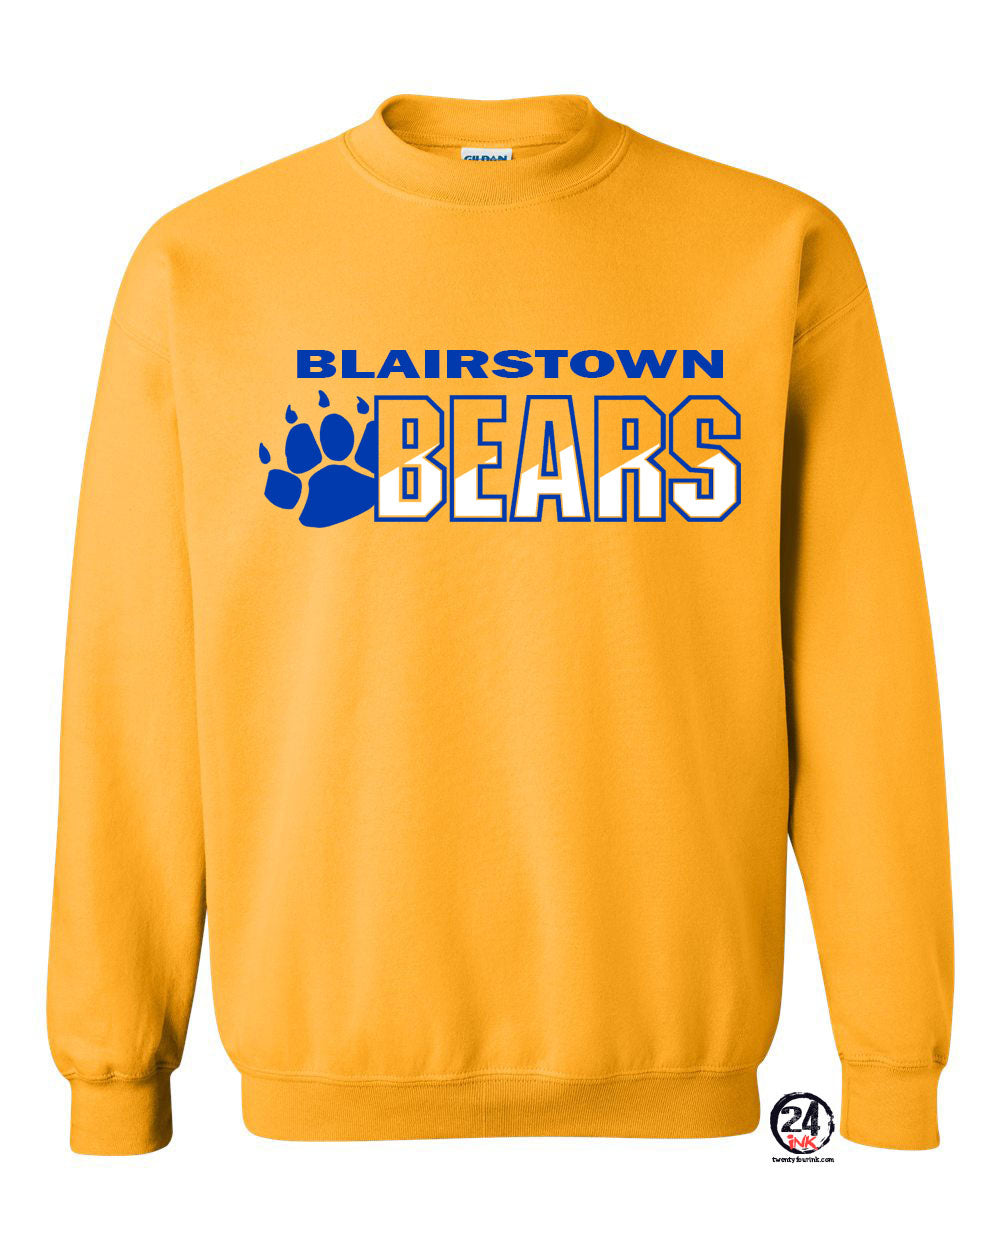 Bears design 1 non hooded sweatshirt